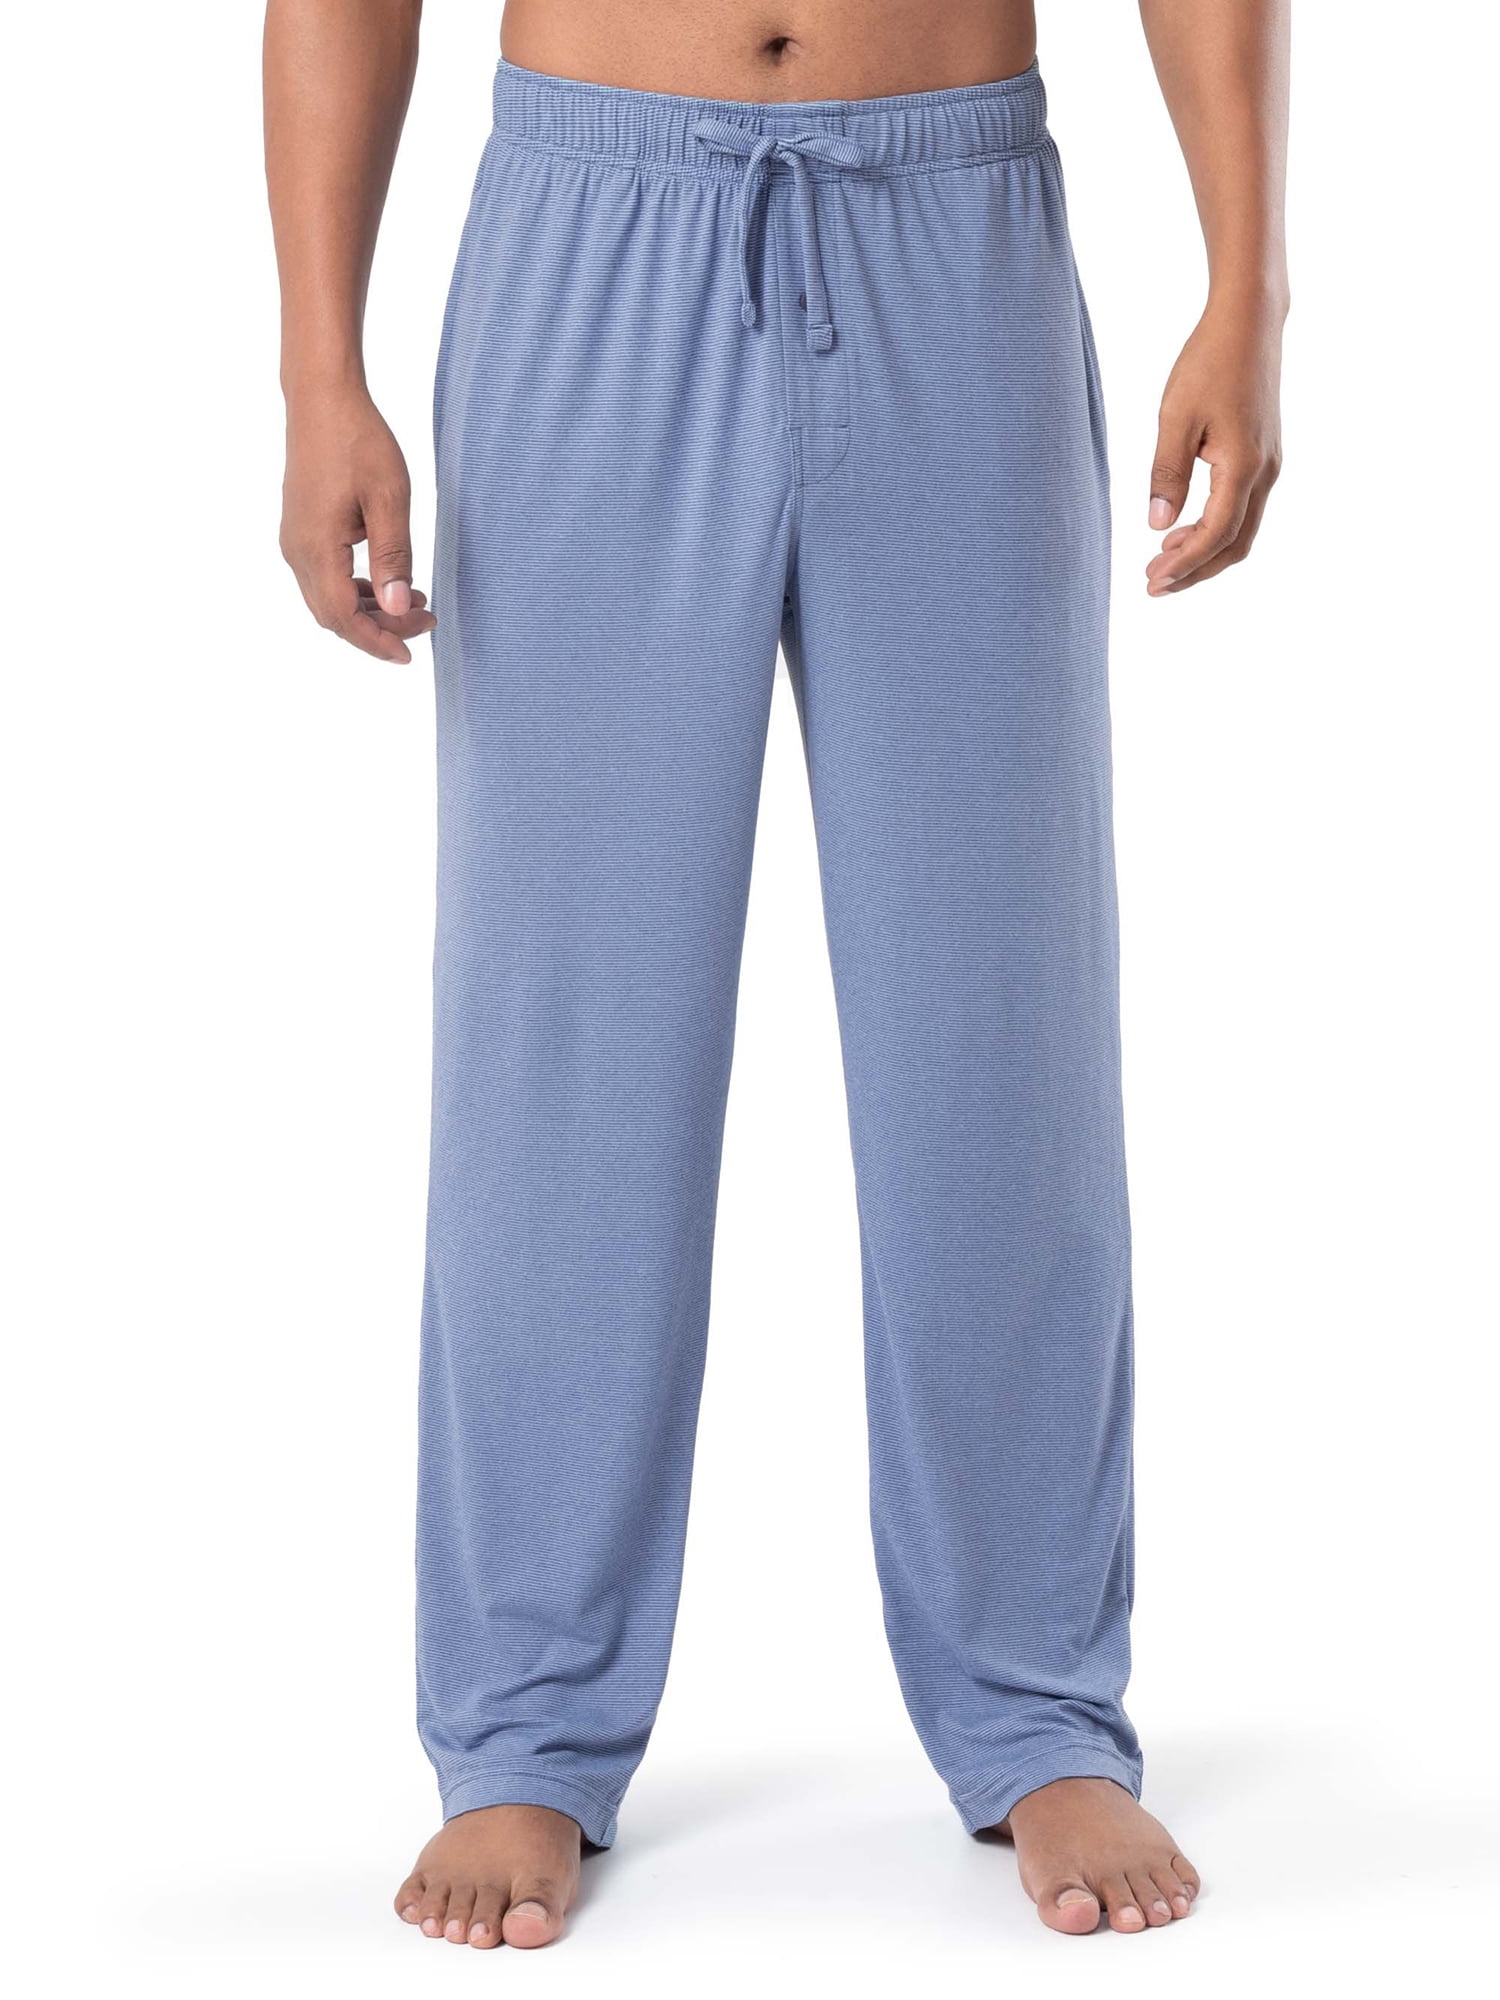 George Men's and Big Men's Feed Stripe Knit Sleep Pajama Pants, S-5XL